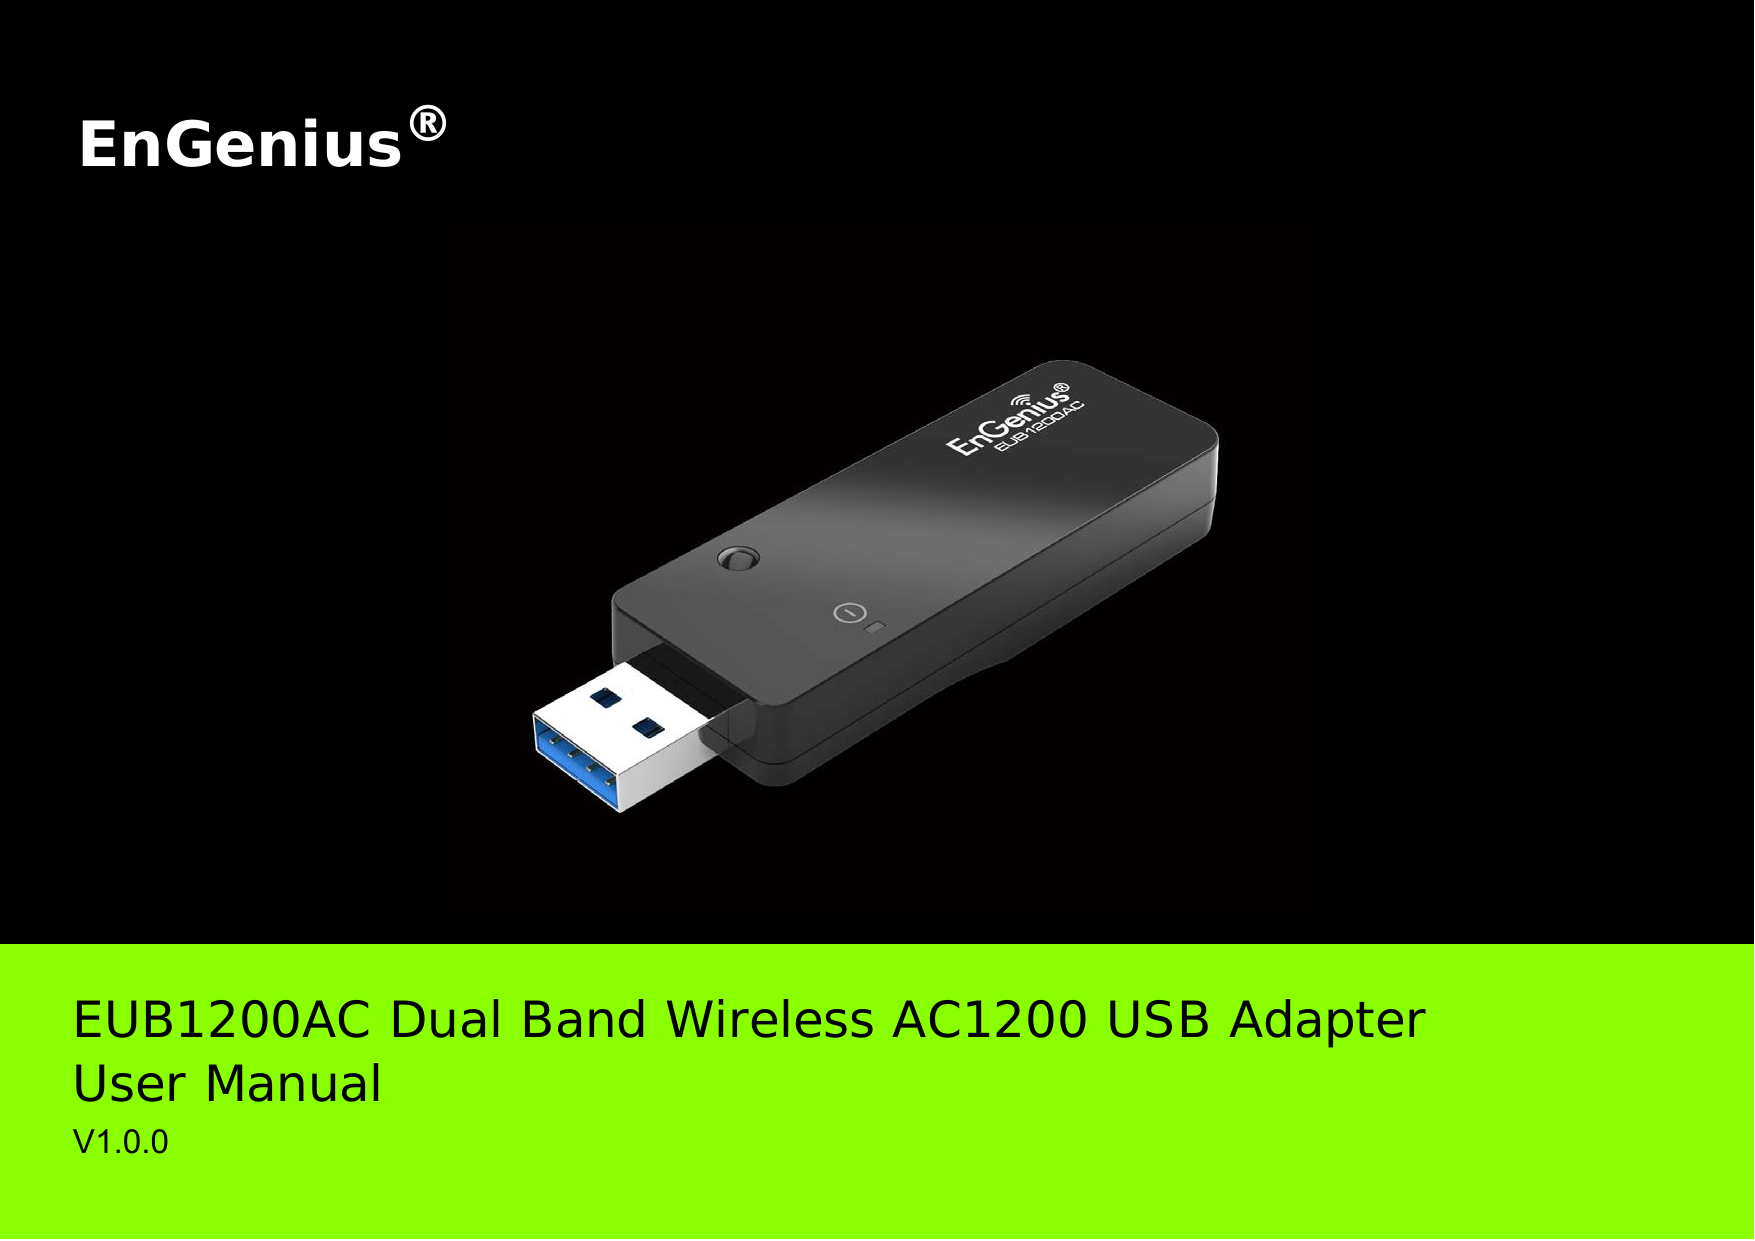 EnGenius®EUB1200AC Dual Band Wireless AC1200 USB Adapter User Manual V1.0.0